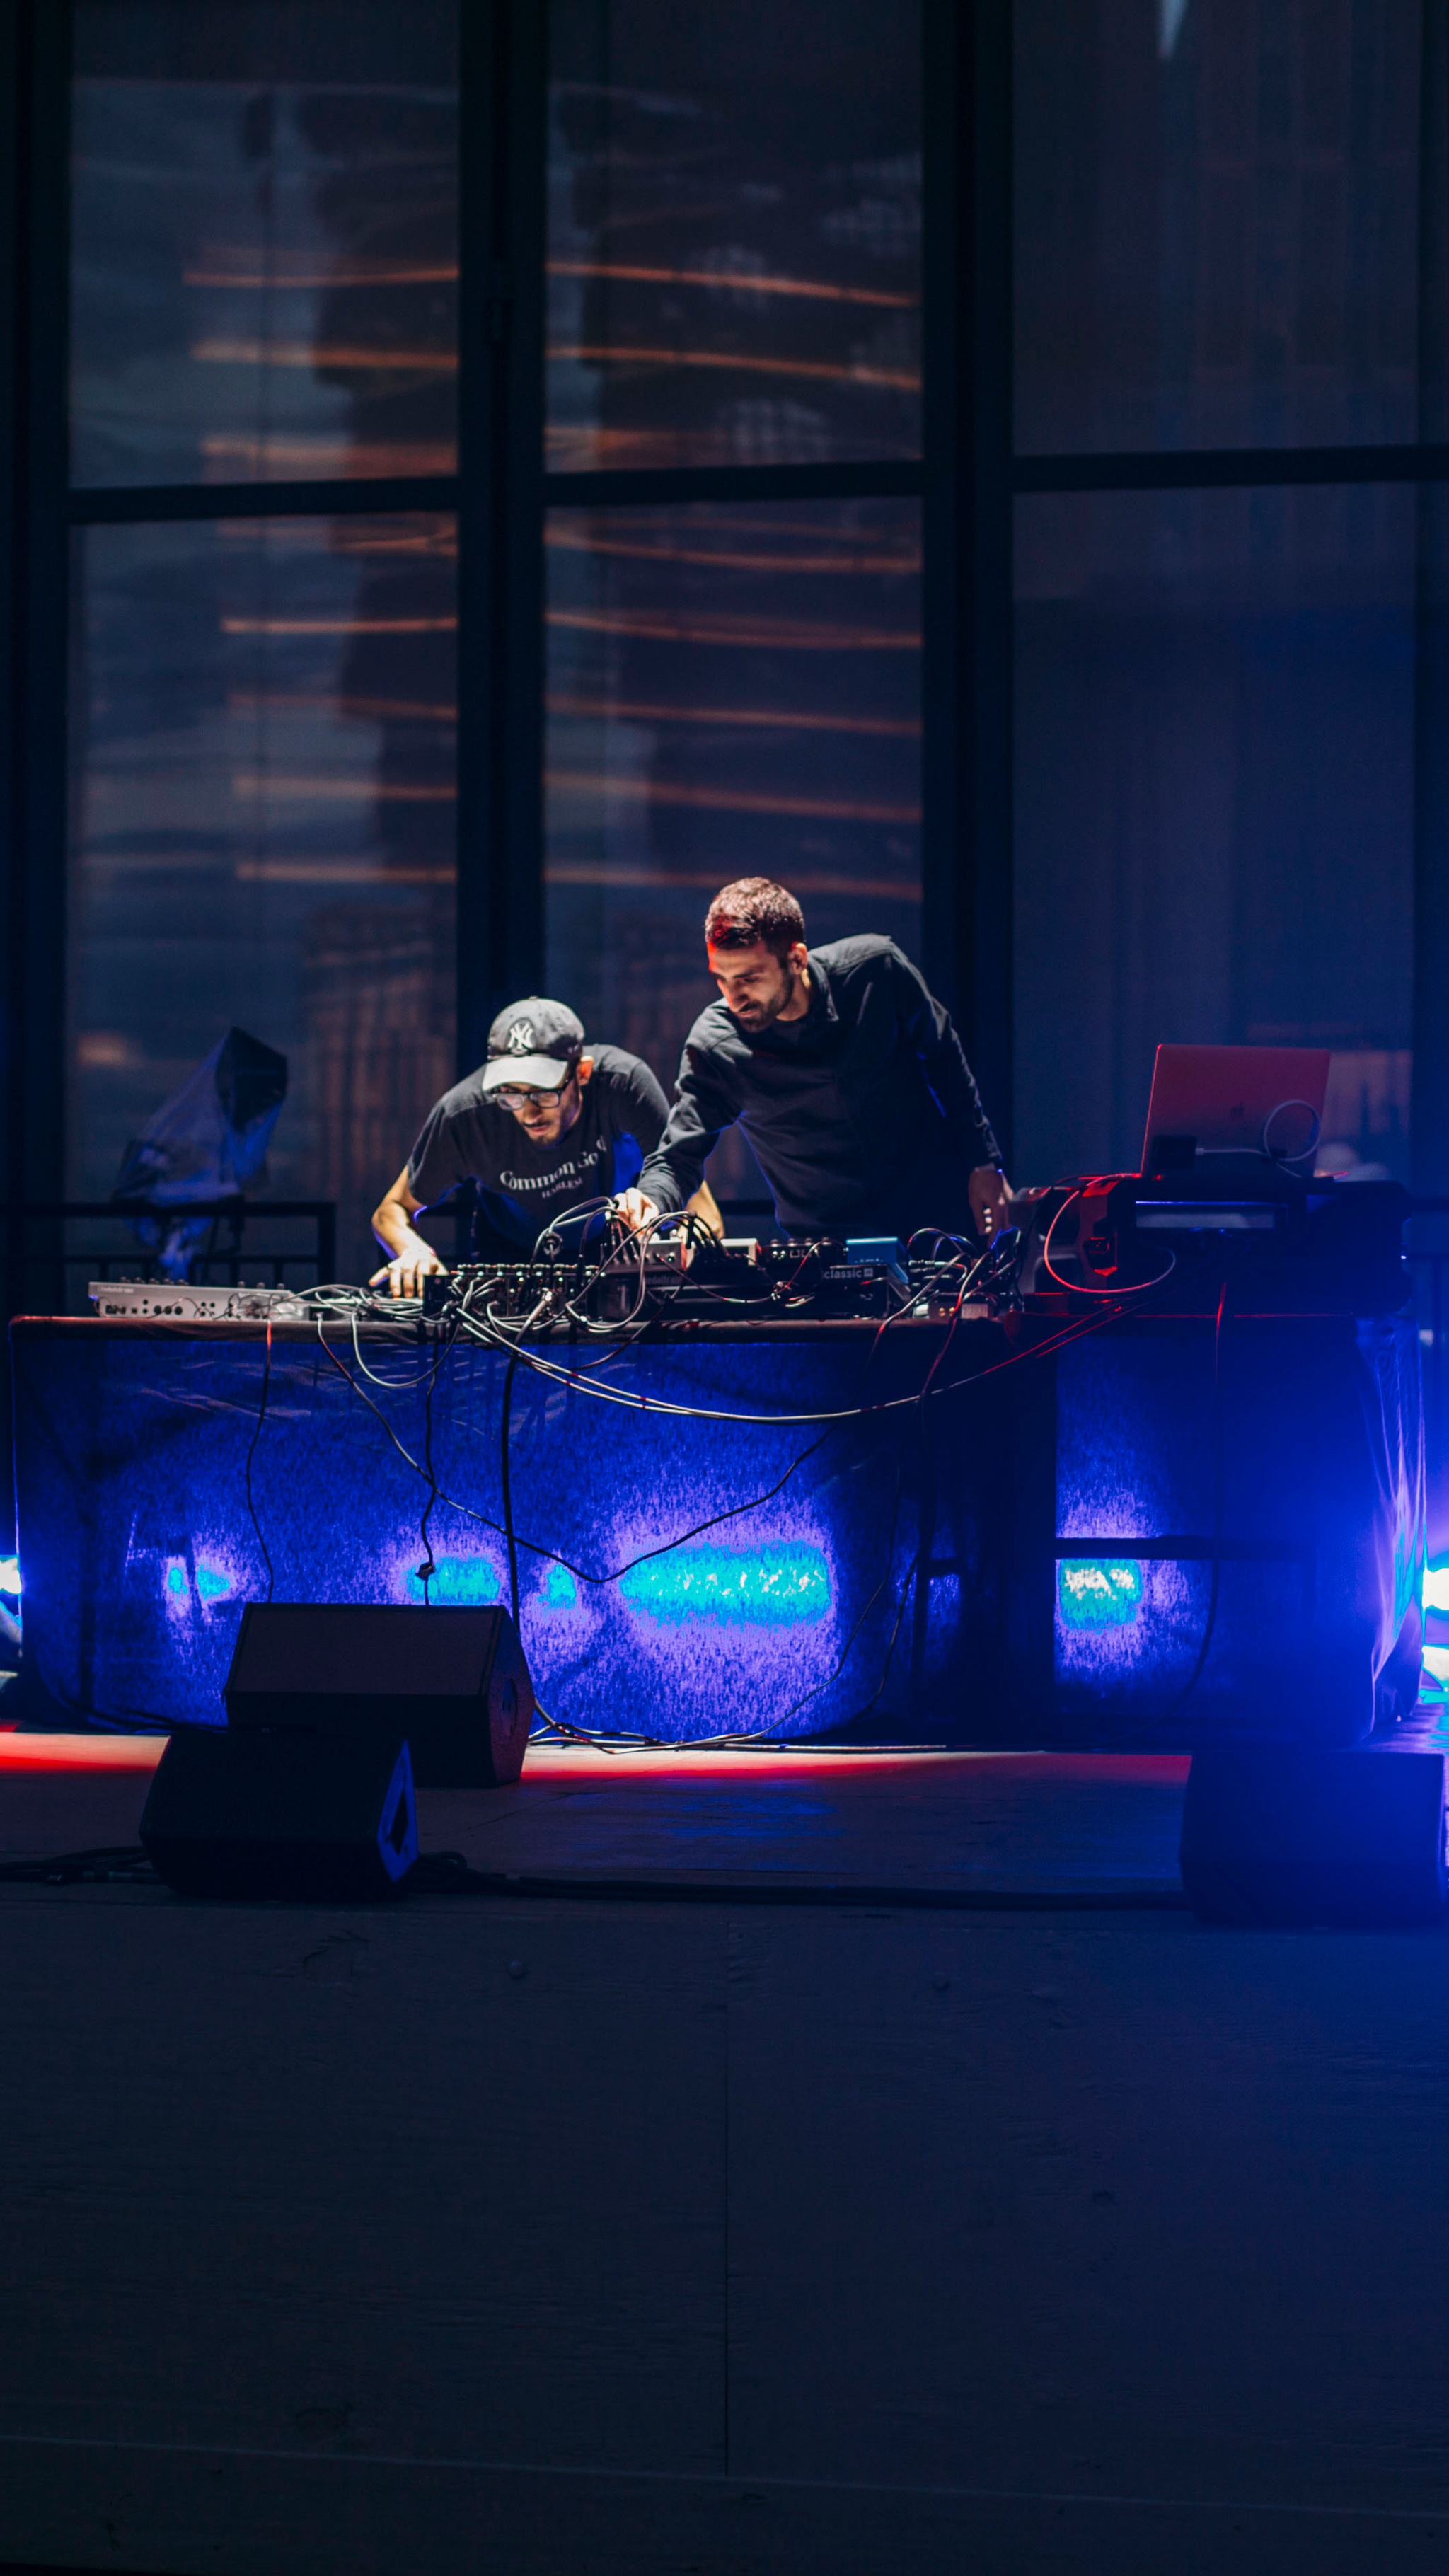 Two men behind an electronic DJ set up.